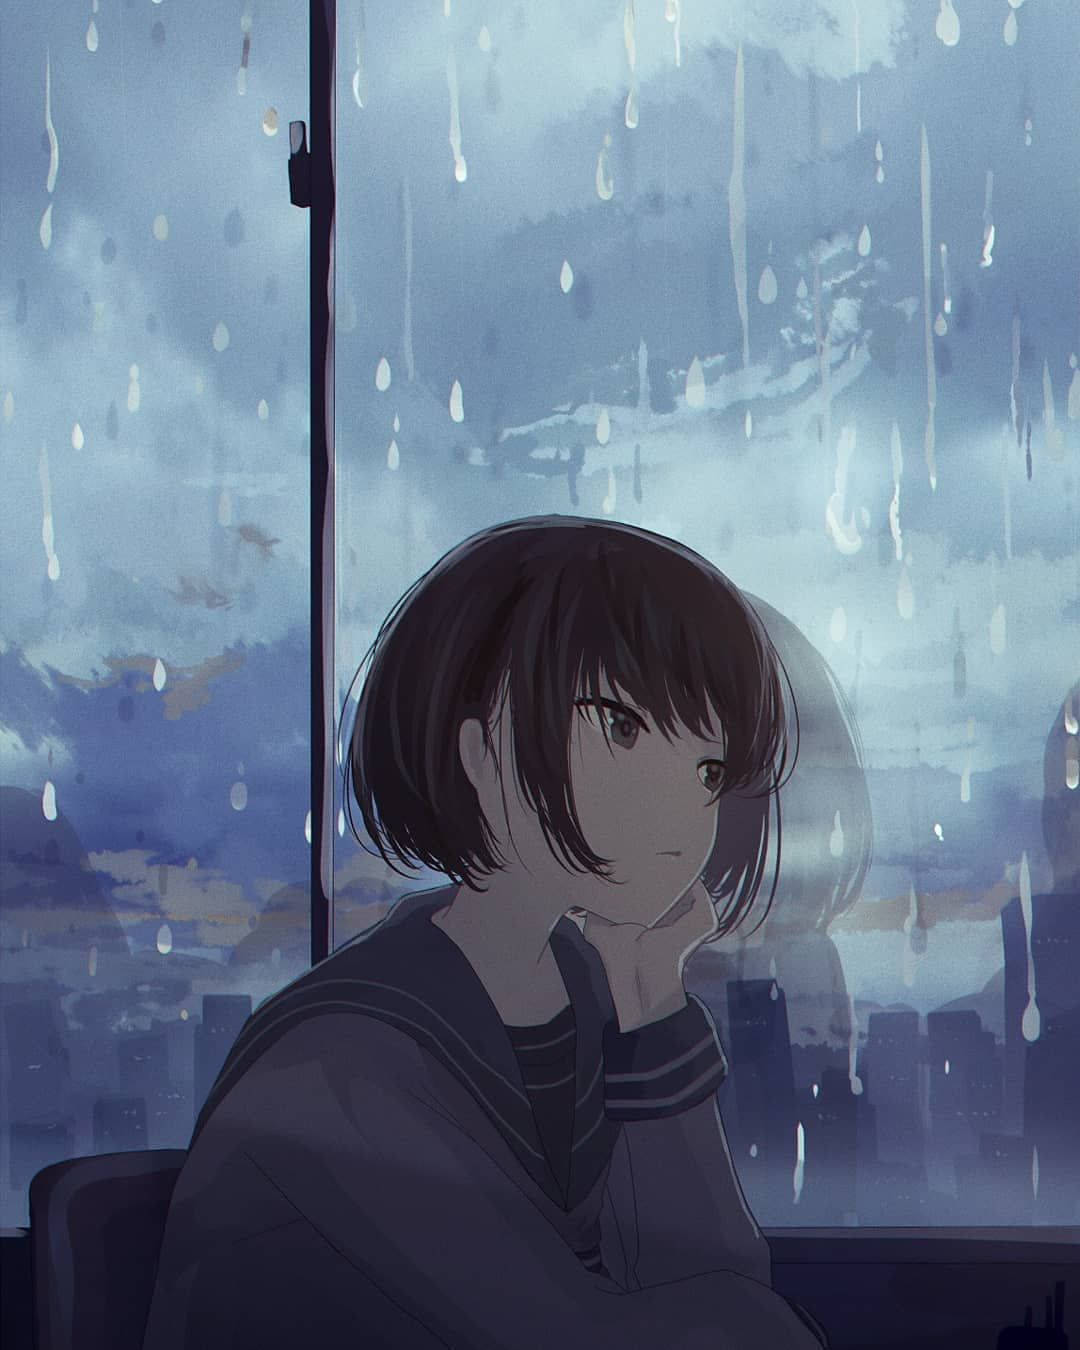 Anime Girl Sad Alone Leaning On Window Raining